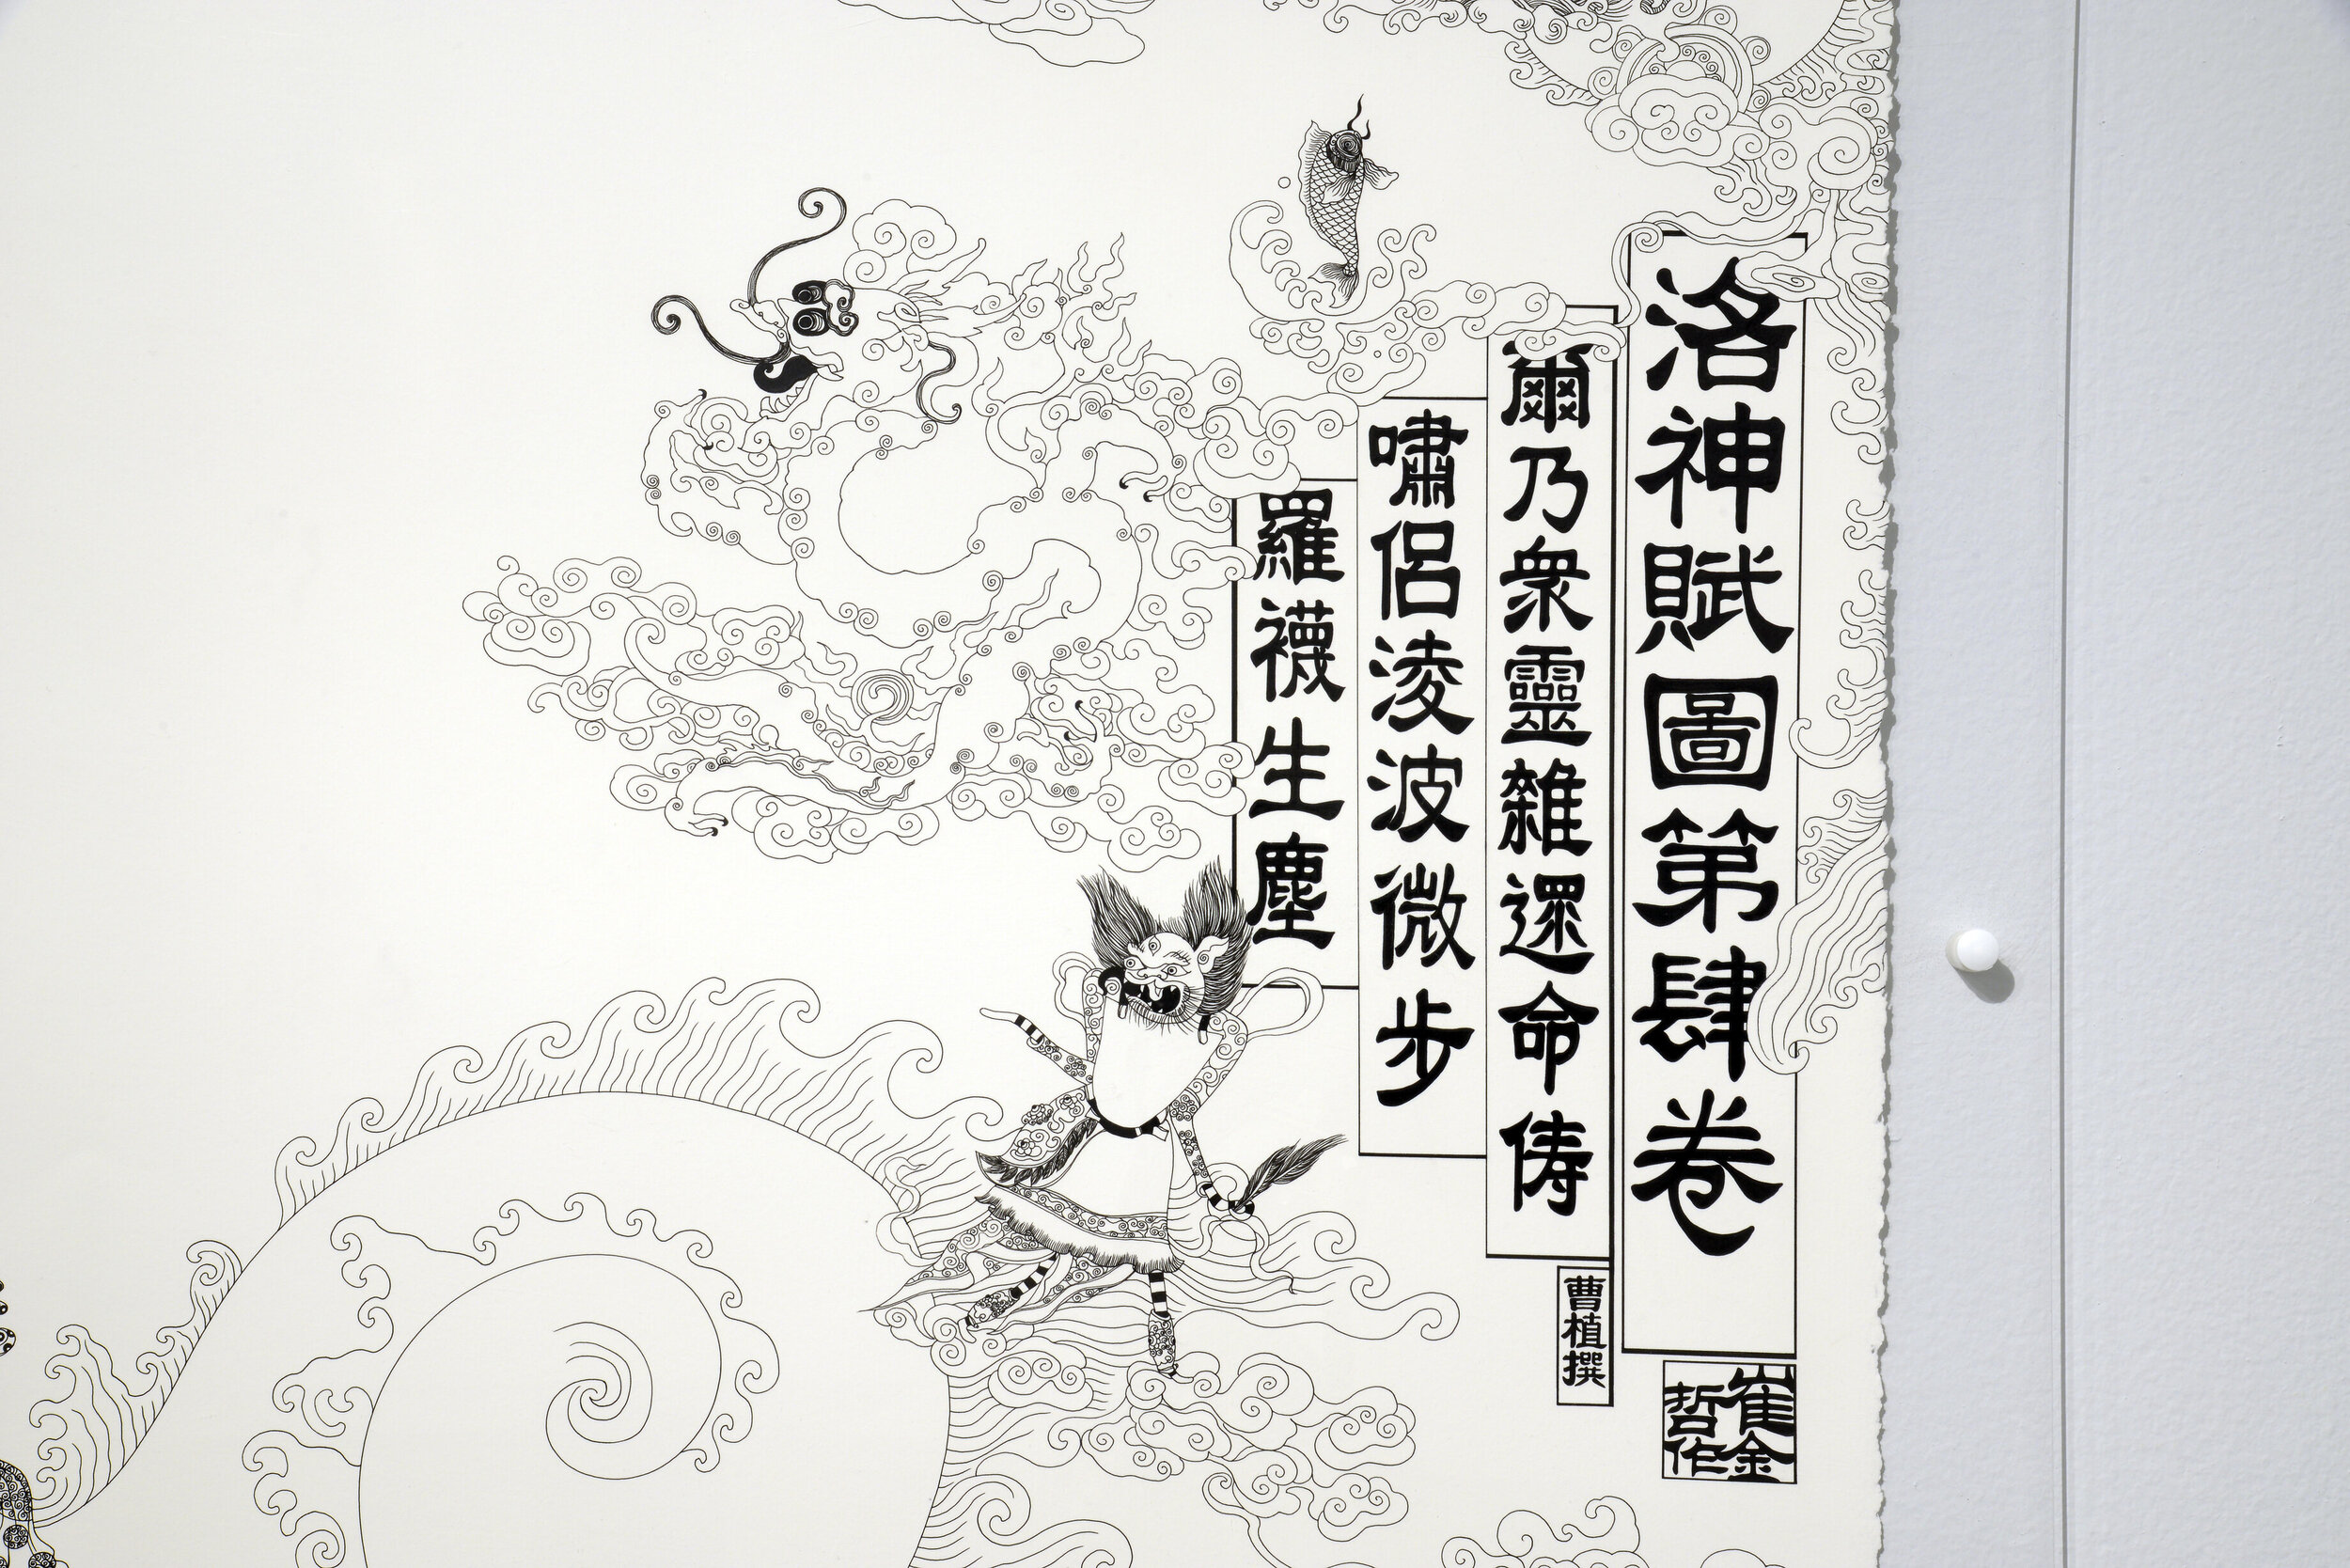  Cui Jinzhe, 卷四“相会” The Feeling of Love (detail)  , 2014. ink on paper. 